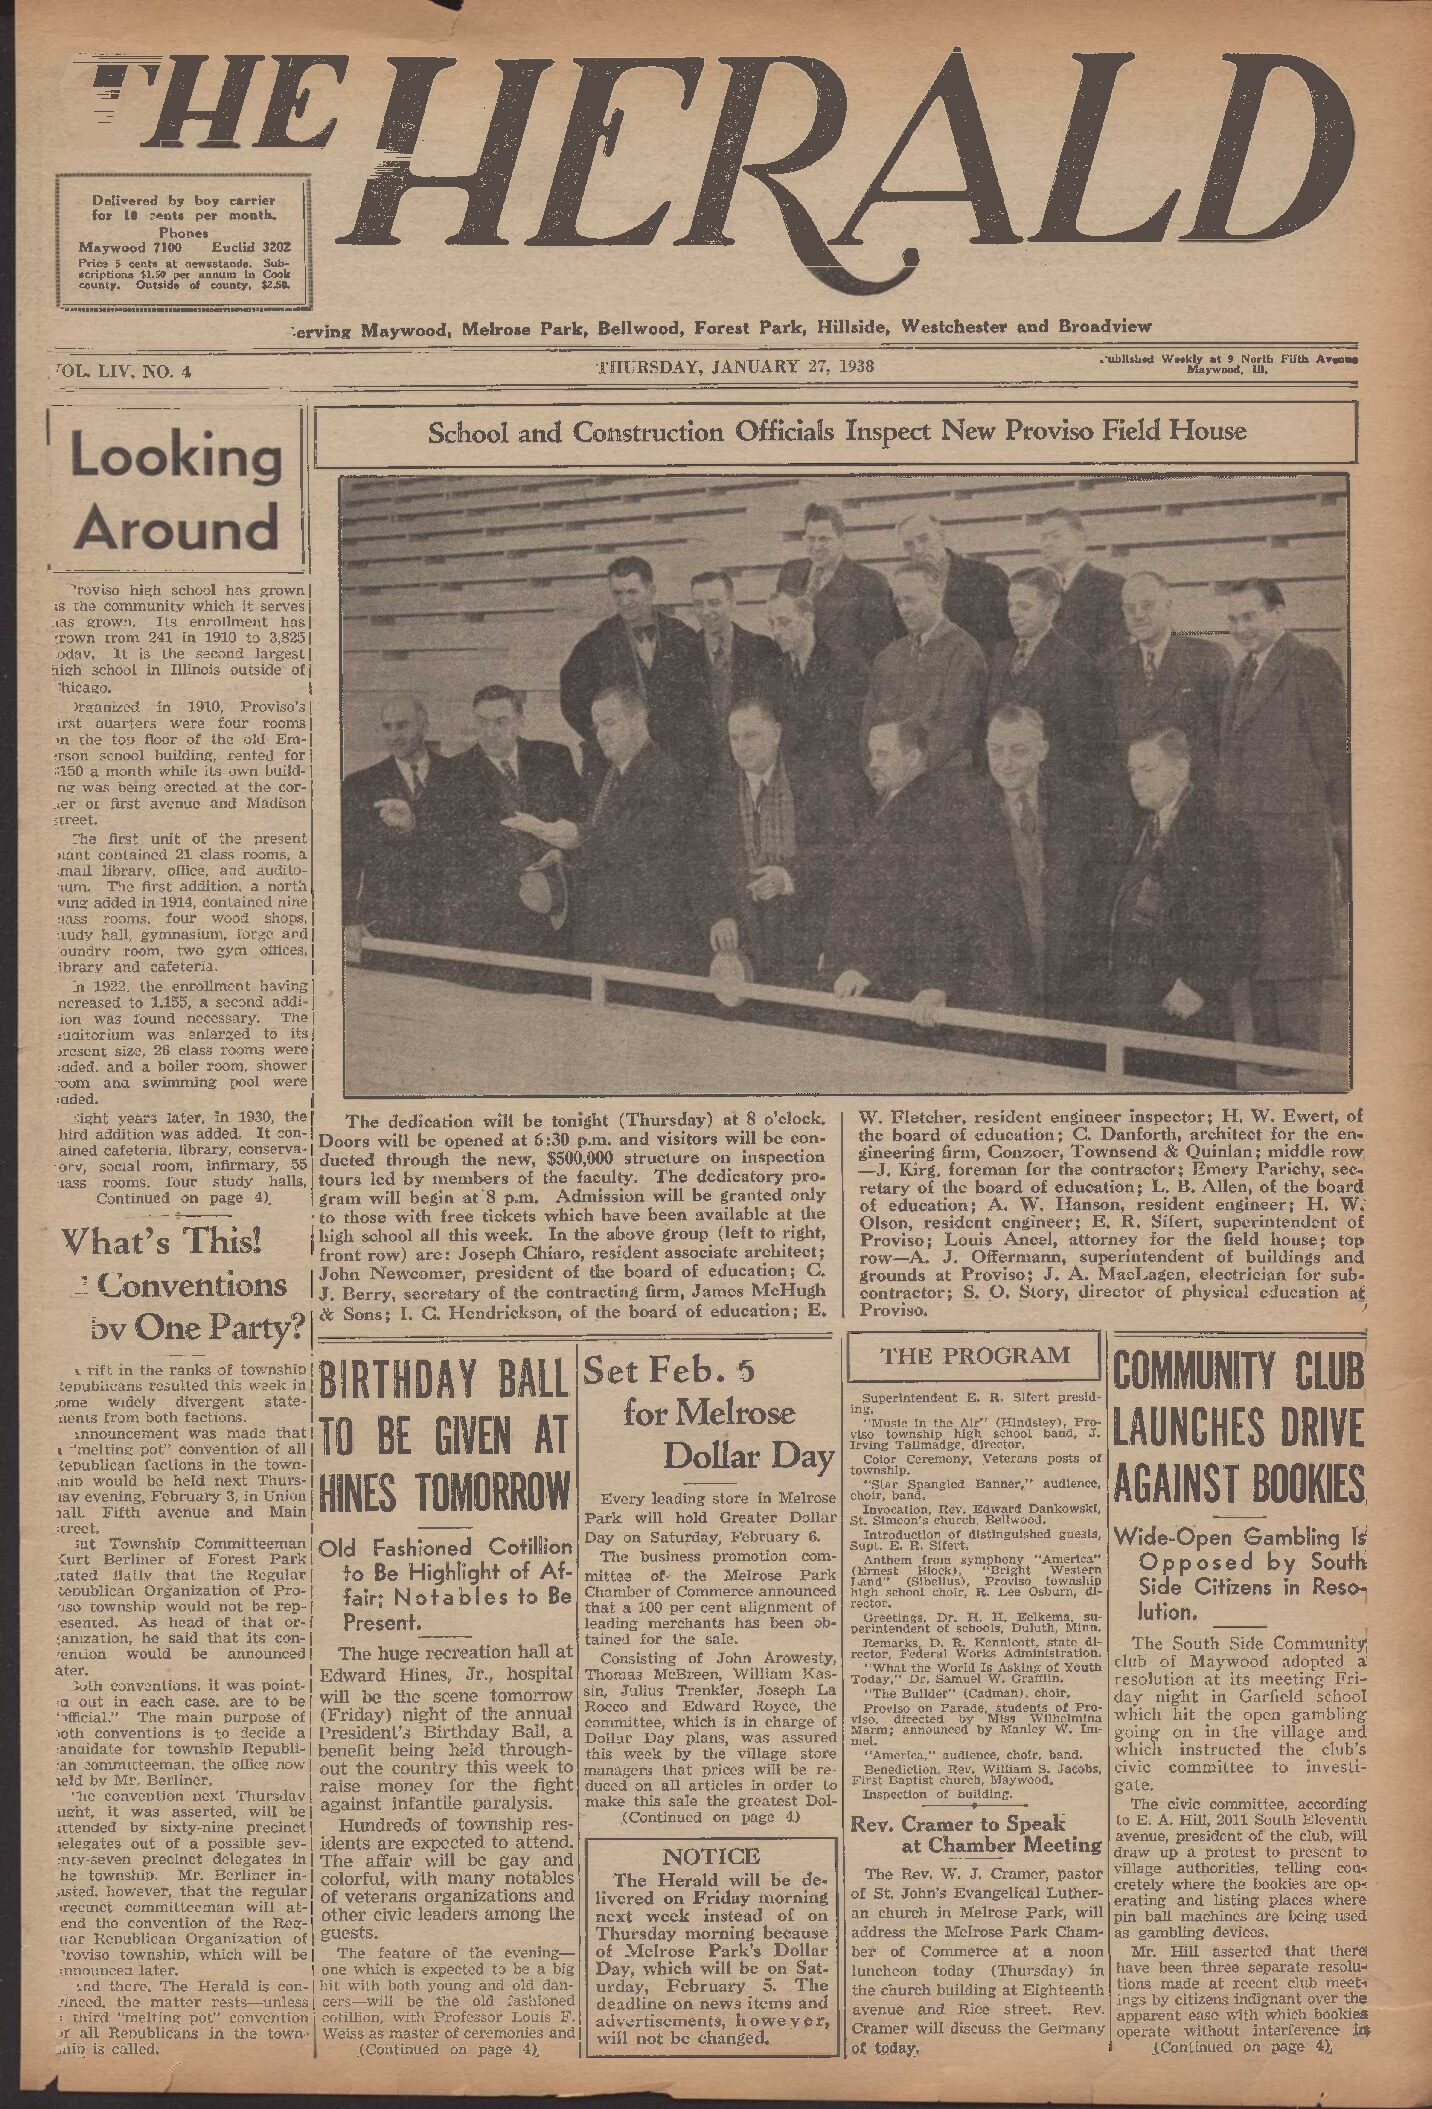 The Herald – 19380127